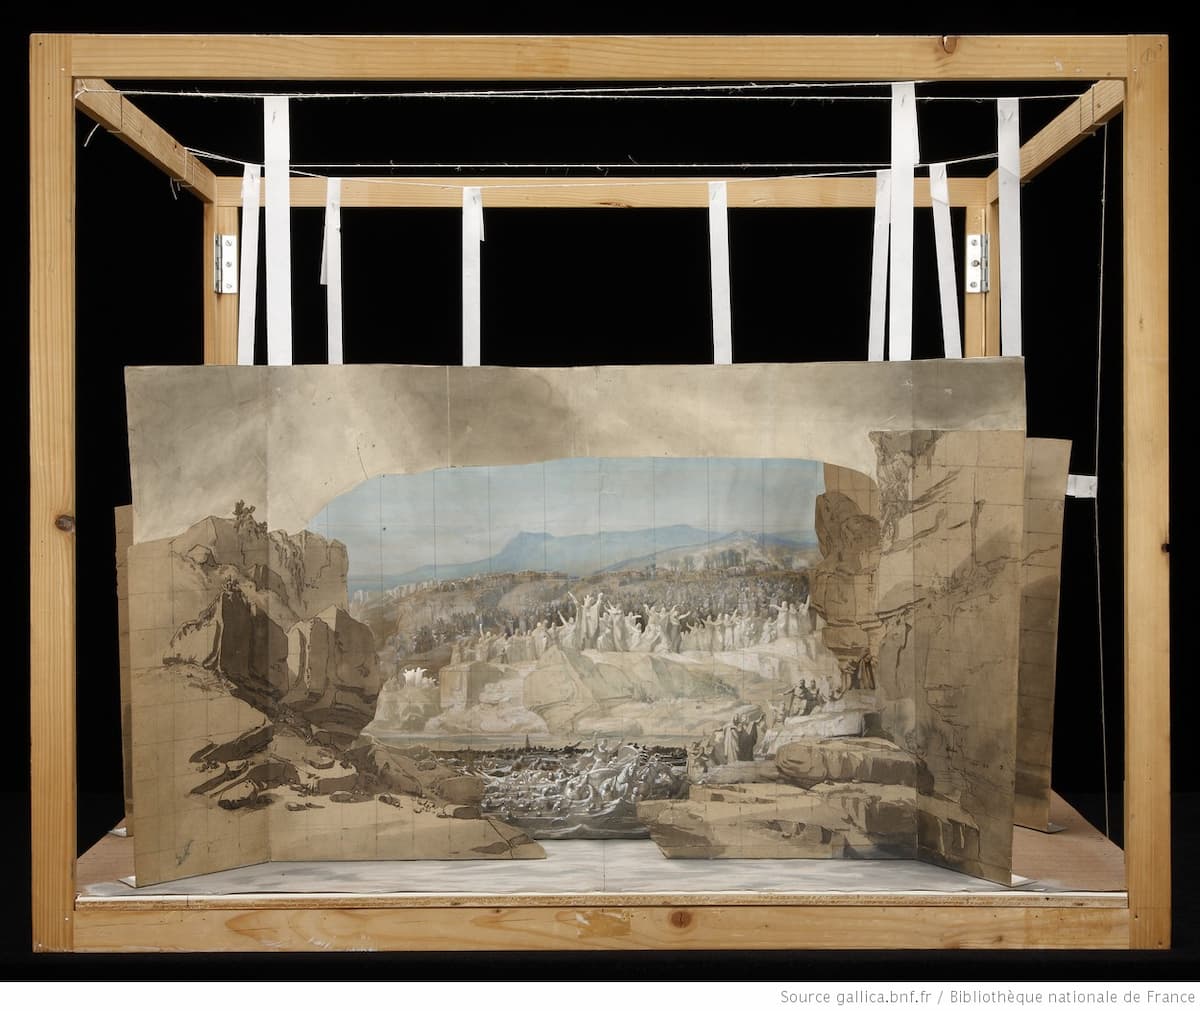 Edouard Despléchin: Moïse, Act IV: Passade de la Mer Rouge, front view, 1863 (Gallica ark:/12148/btv1b7003329b)